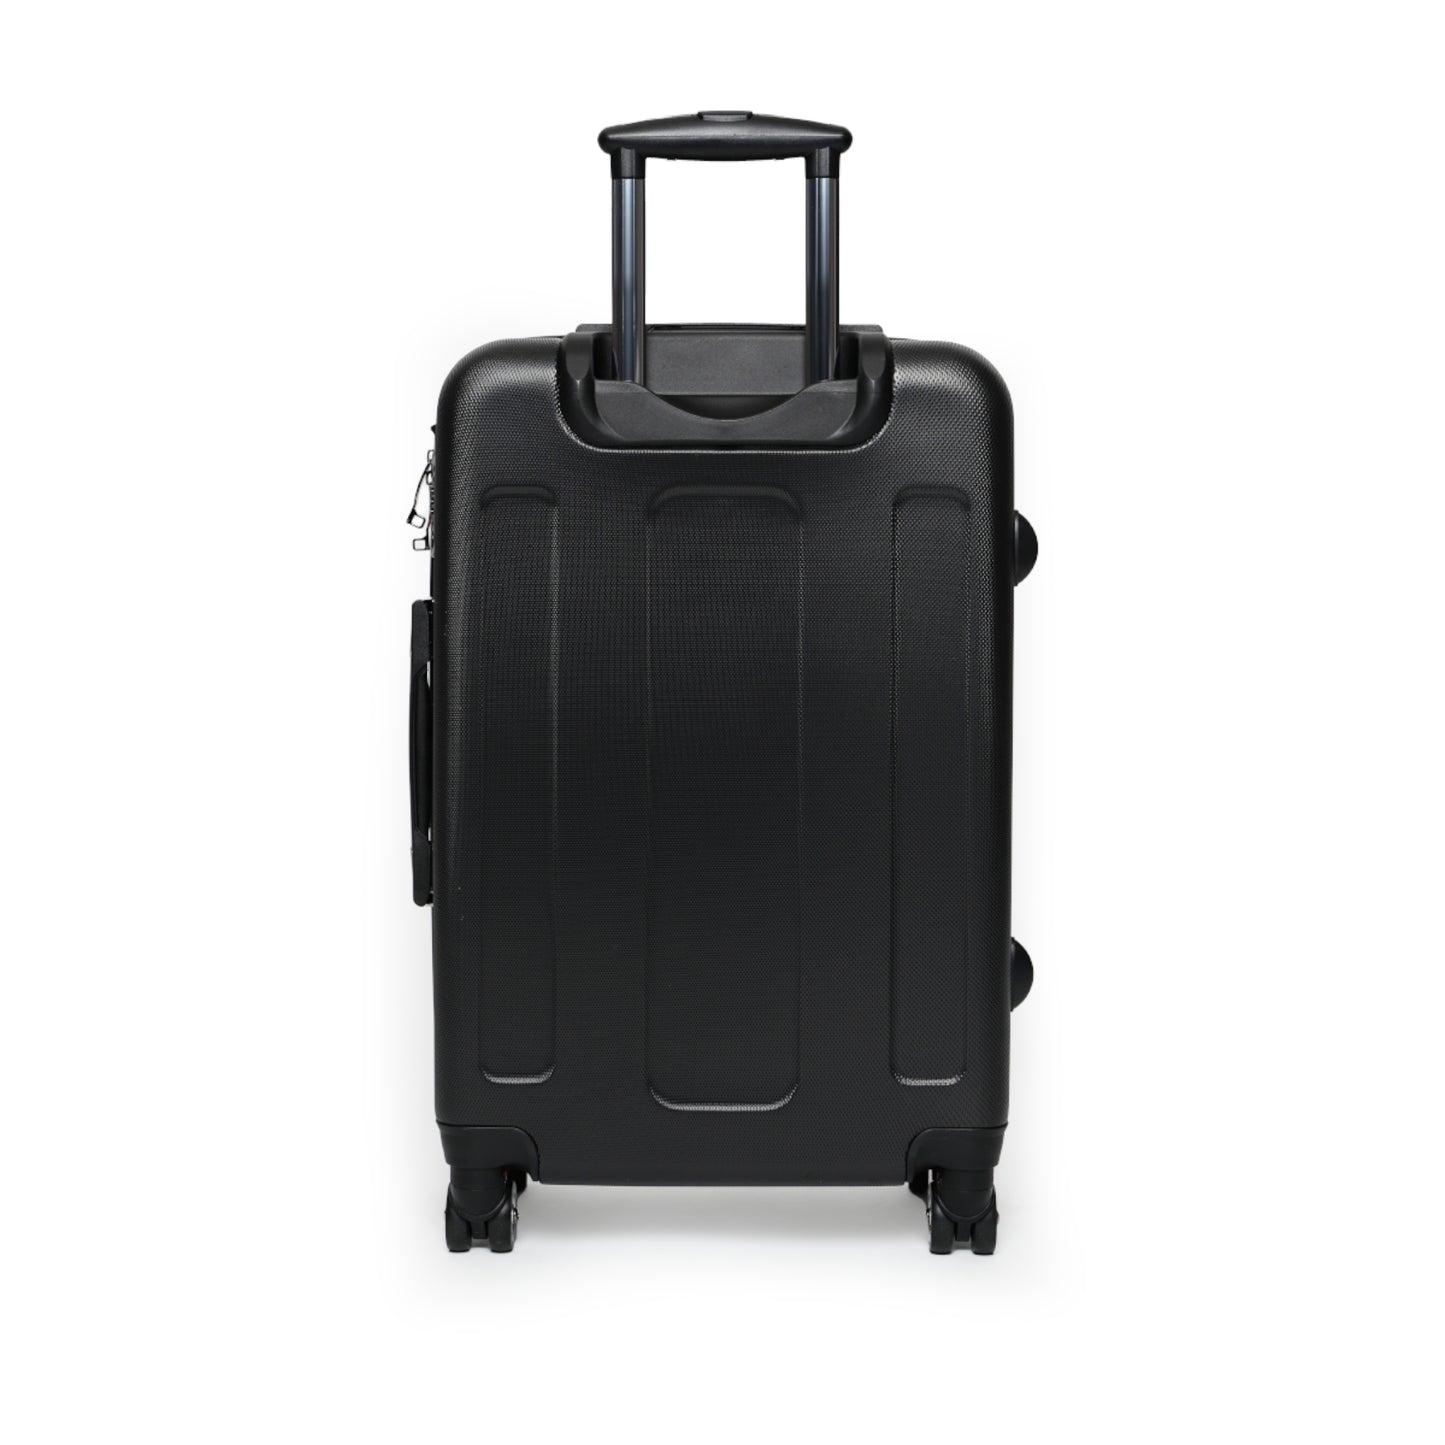 Vintage Mushrooms Stylish & Unique Hard-Shell Suitcase: Durable, Lightweight, Expandable Luggage with 360° Swivel Wheels & Secure Lock for Fashion-Forward Travelers, Free US Shipping